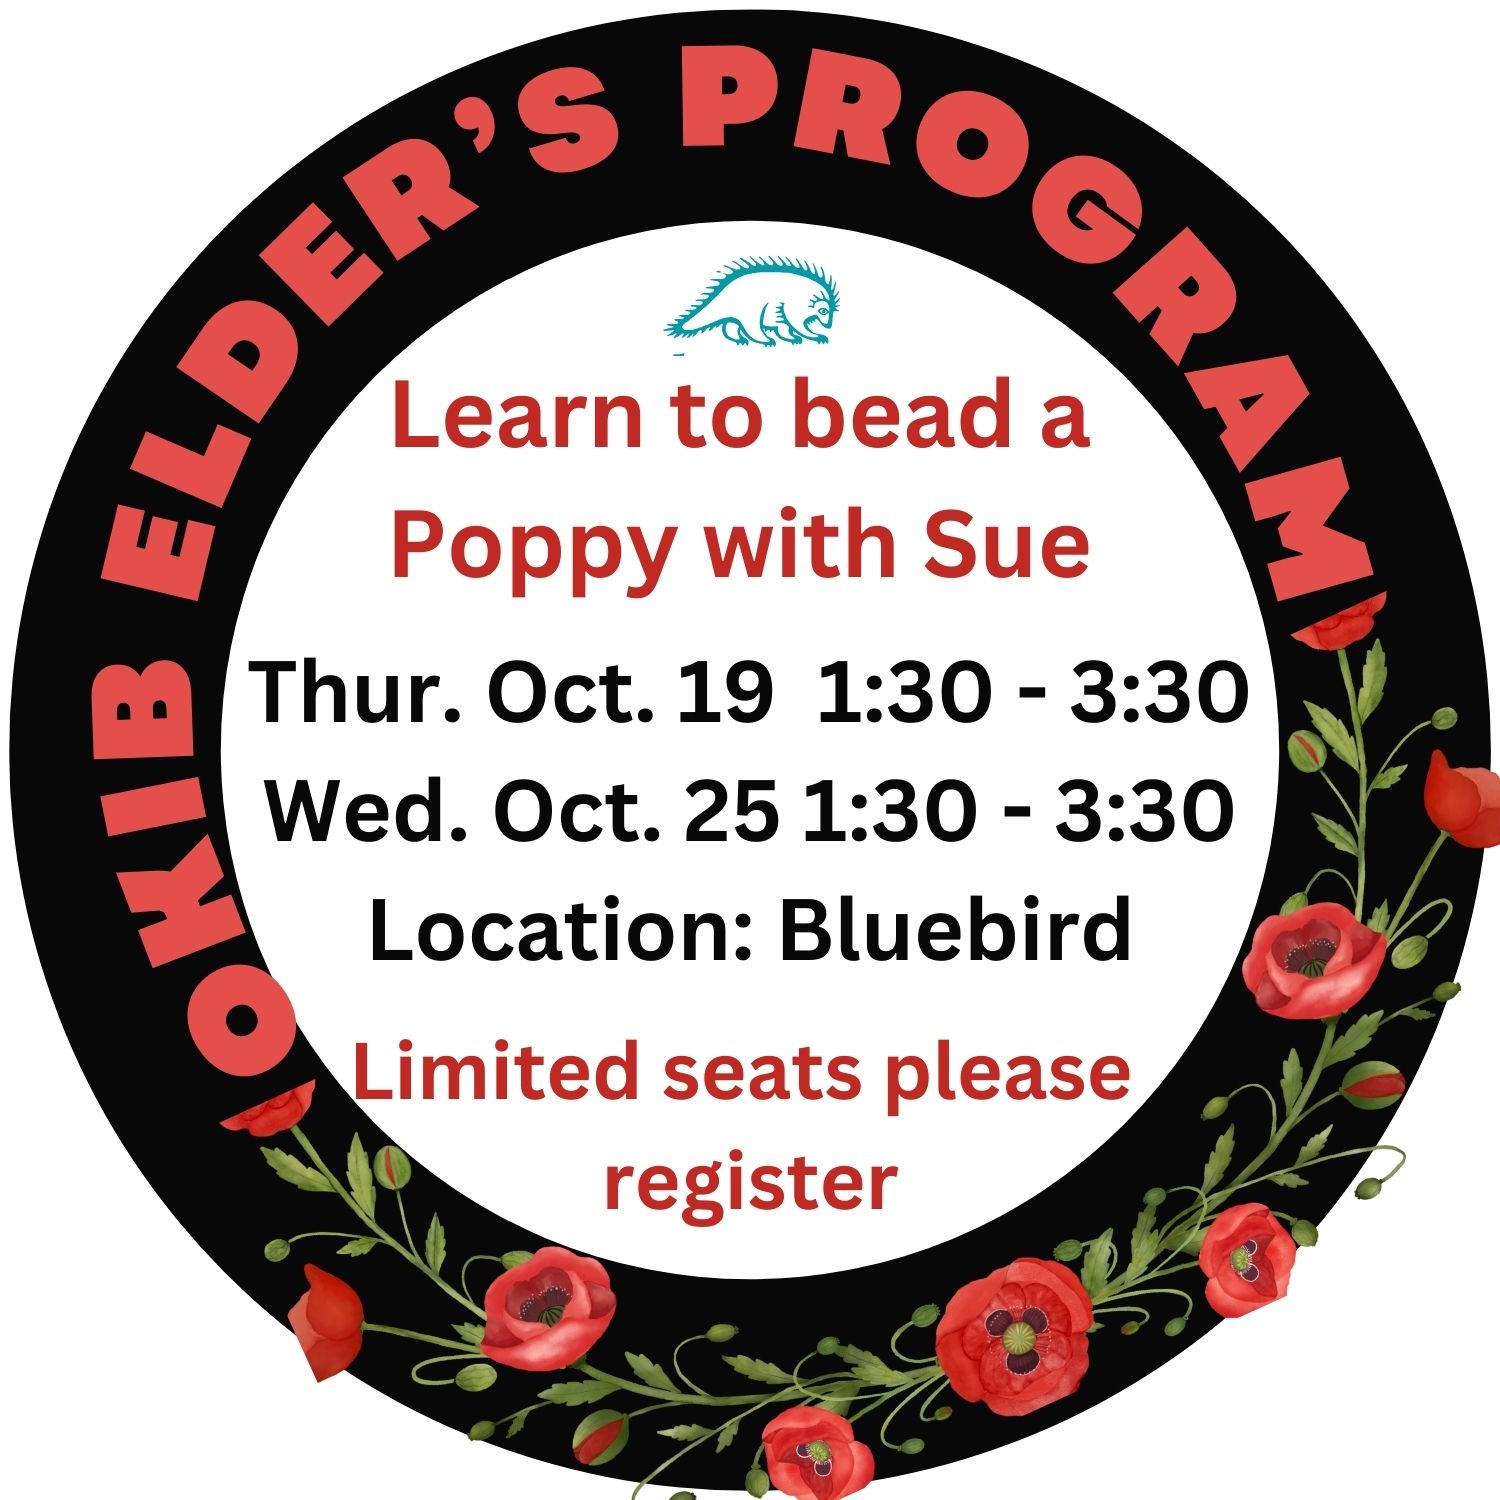 Learn how to bead a poppy – Elder’s Program